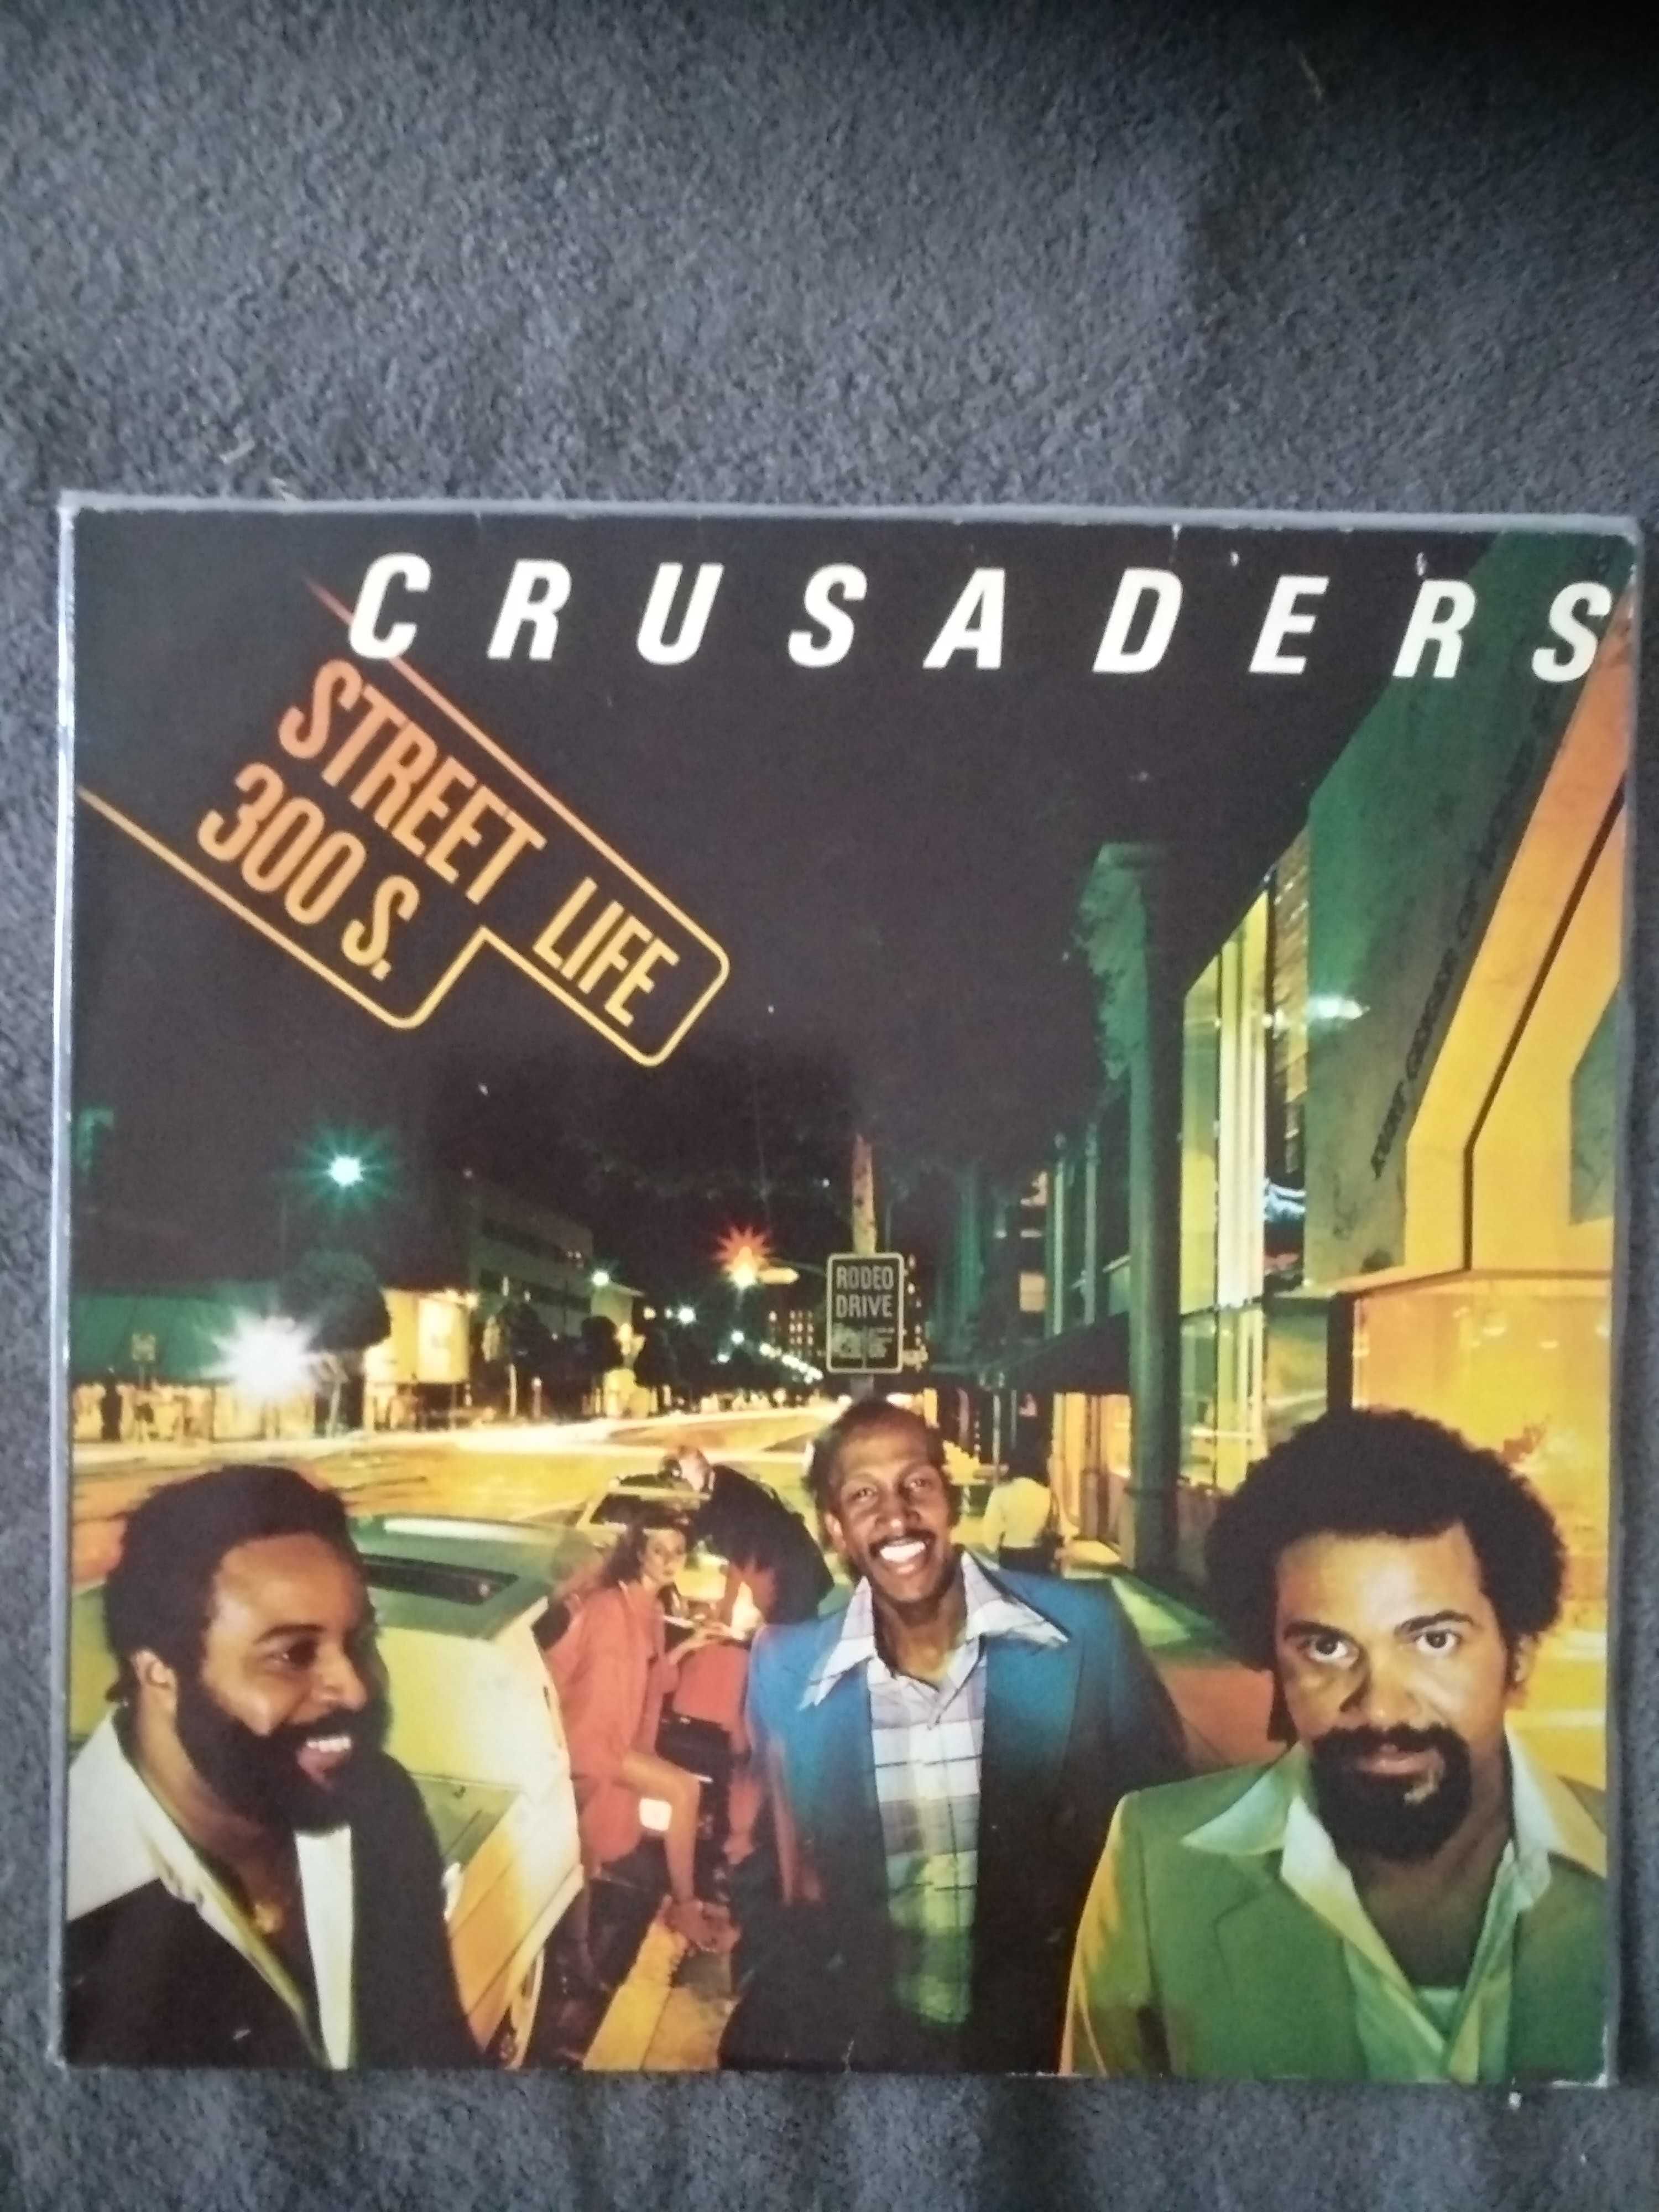 Crusaders – Street Life 1 press holland